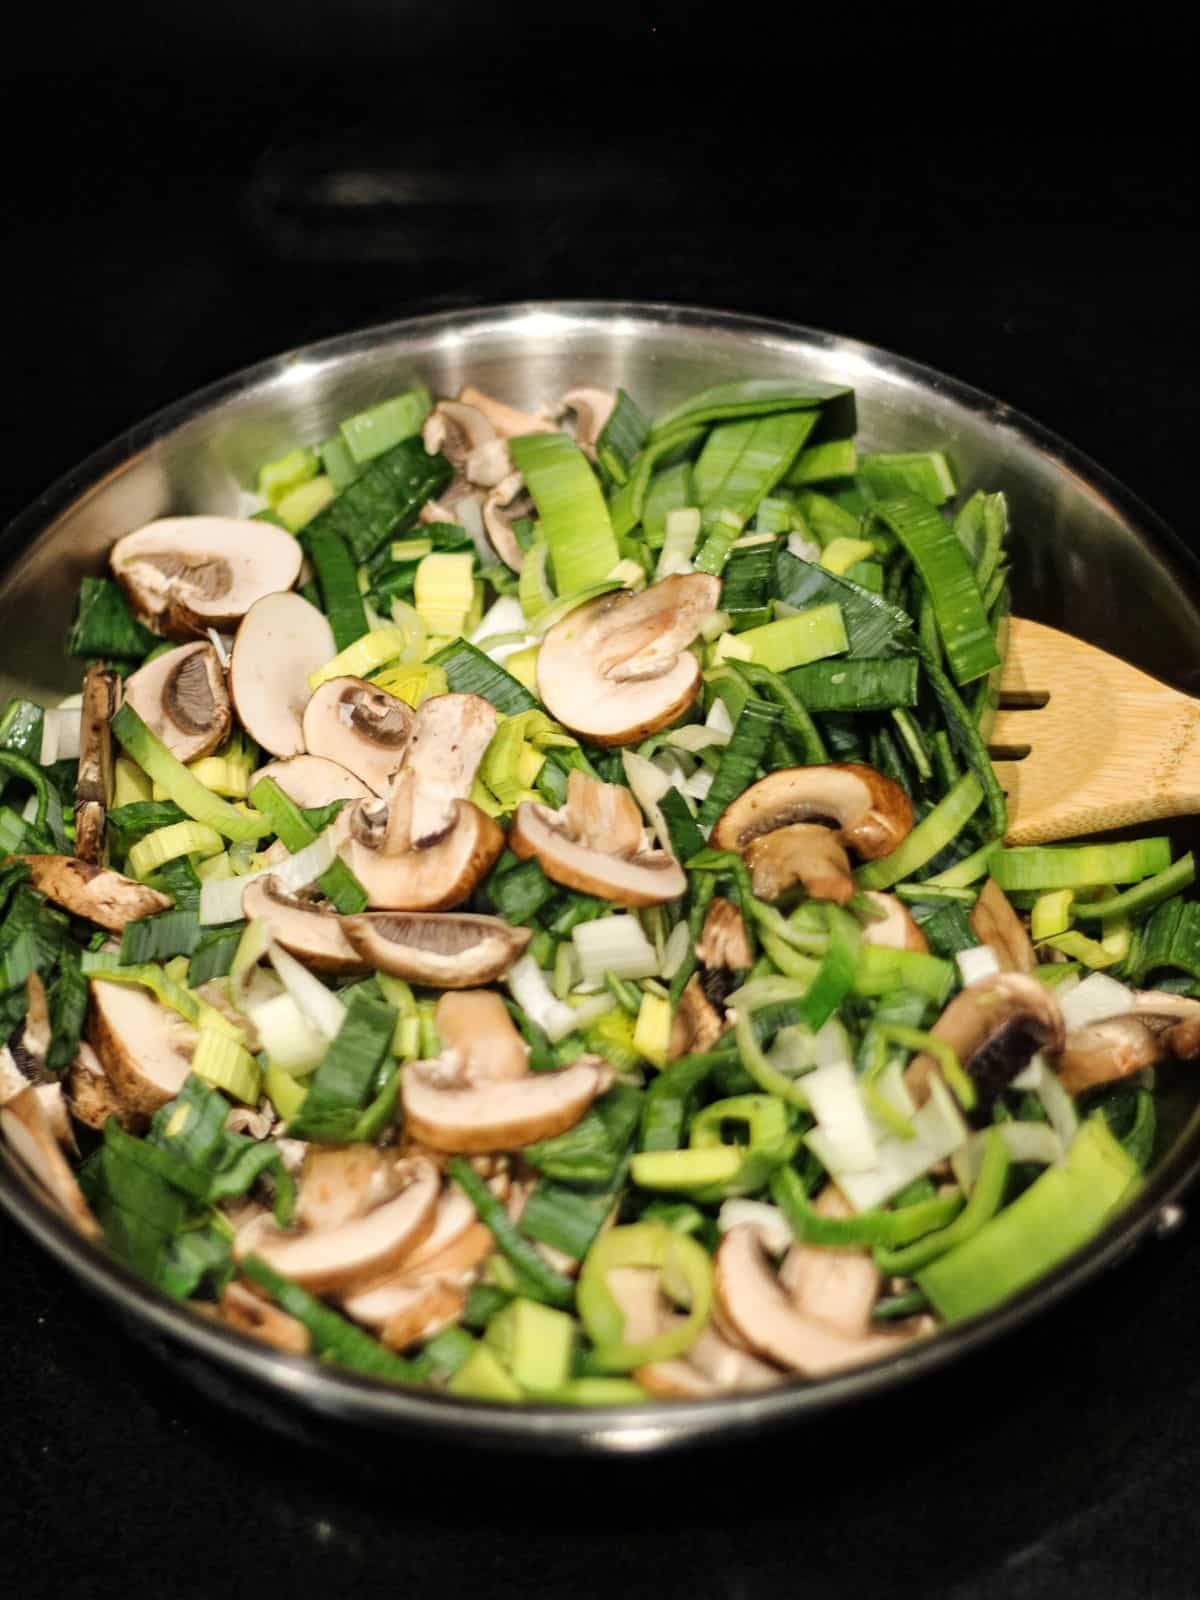 Sauteing garlic, leek, and mushrooms in a skillet.